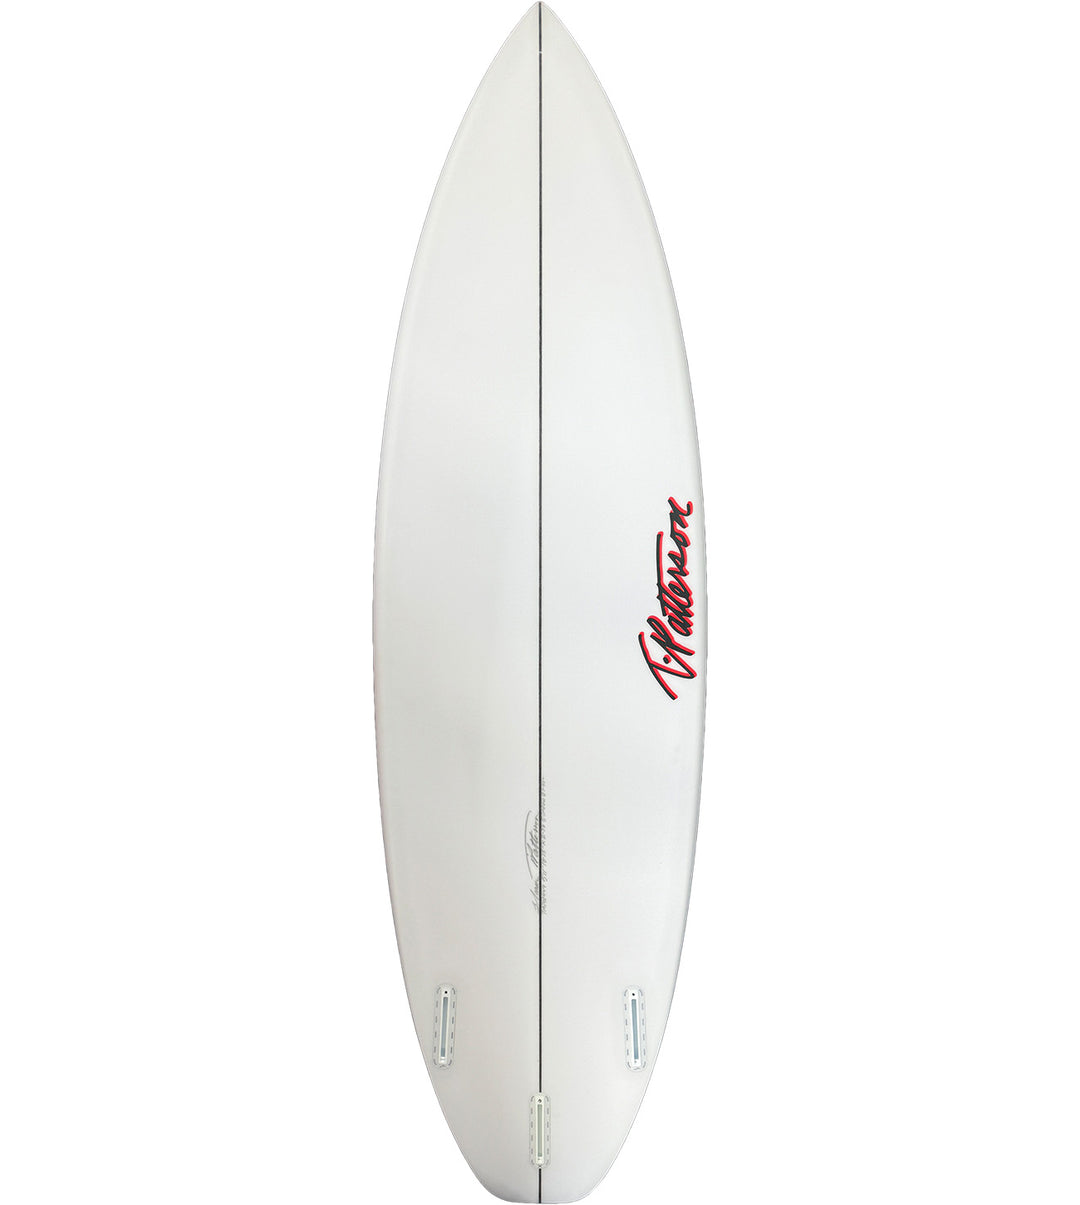 TPatterson Surfboard
TP 5 Speed/Futures 5'11'' #TA240449